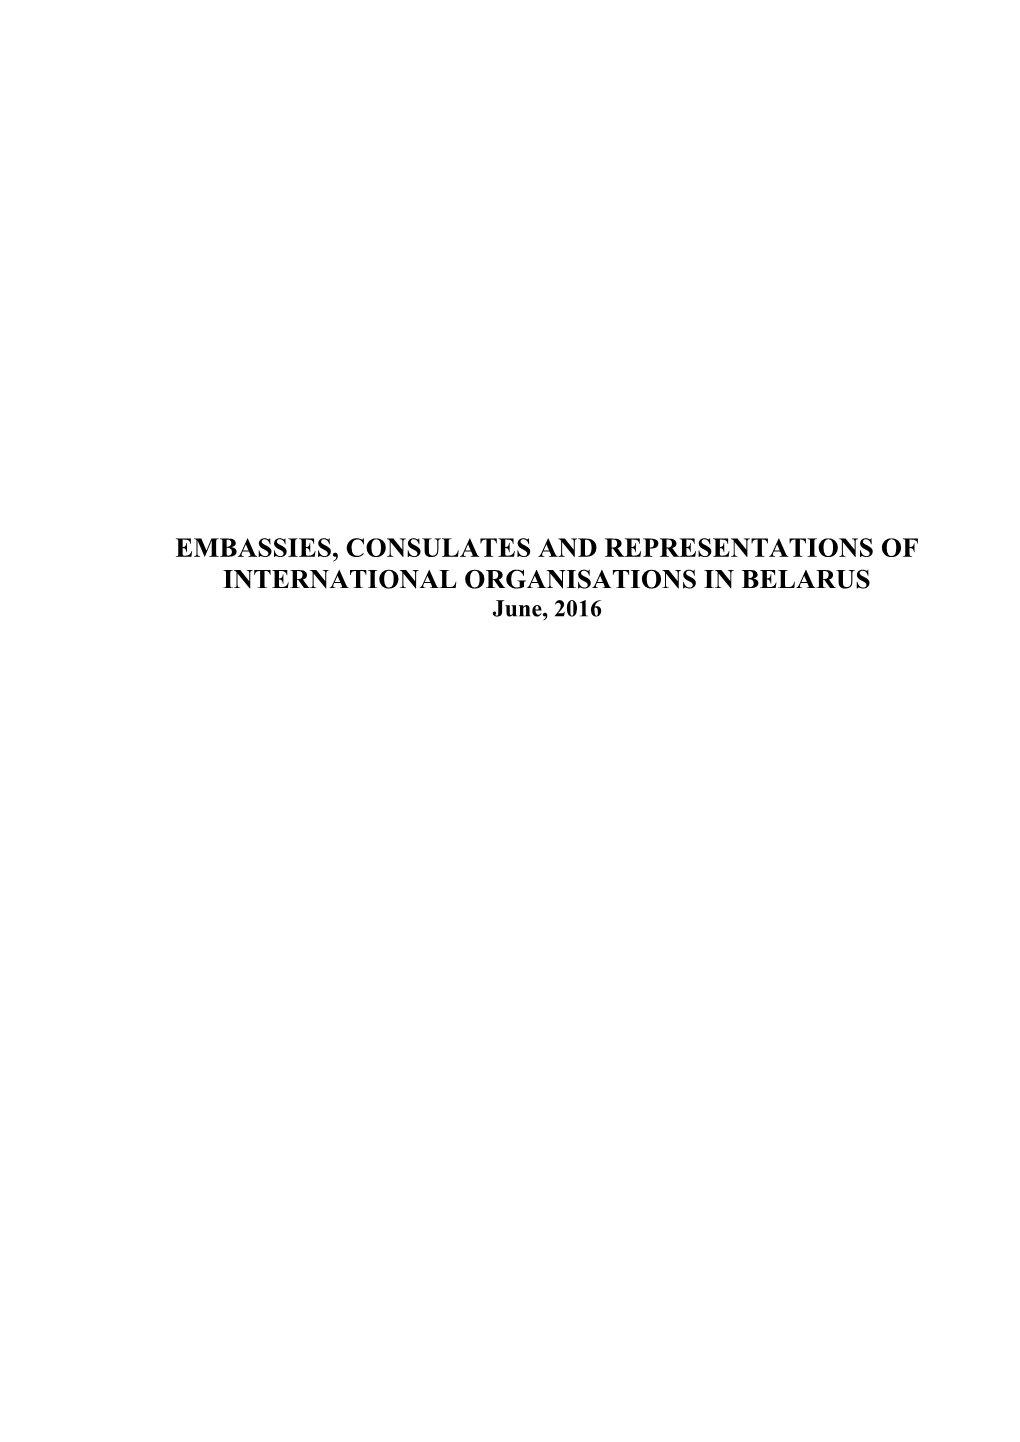 EMBASSIES, CONSULATES and REPRESENTATIONS of INTERNATIONAL ORGANISATIONS in BELARUS June, 2016